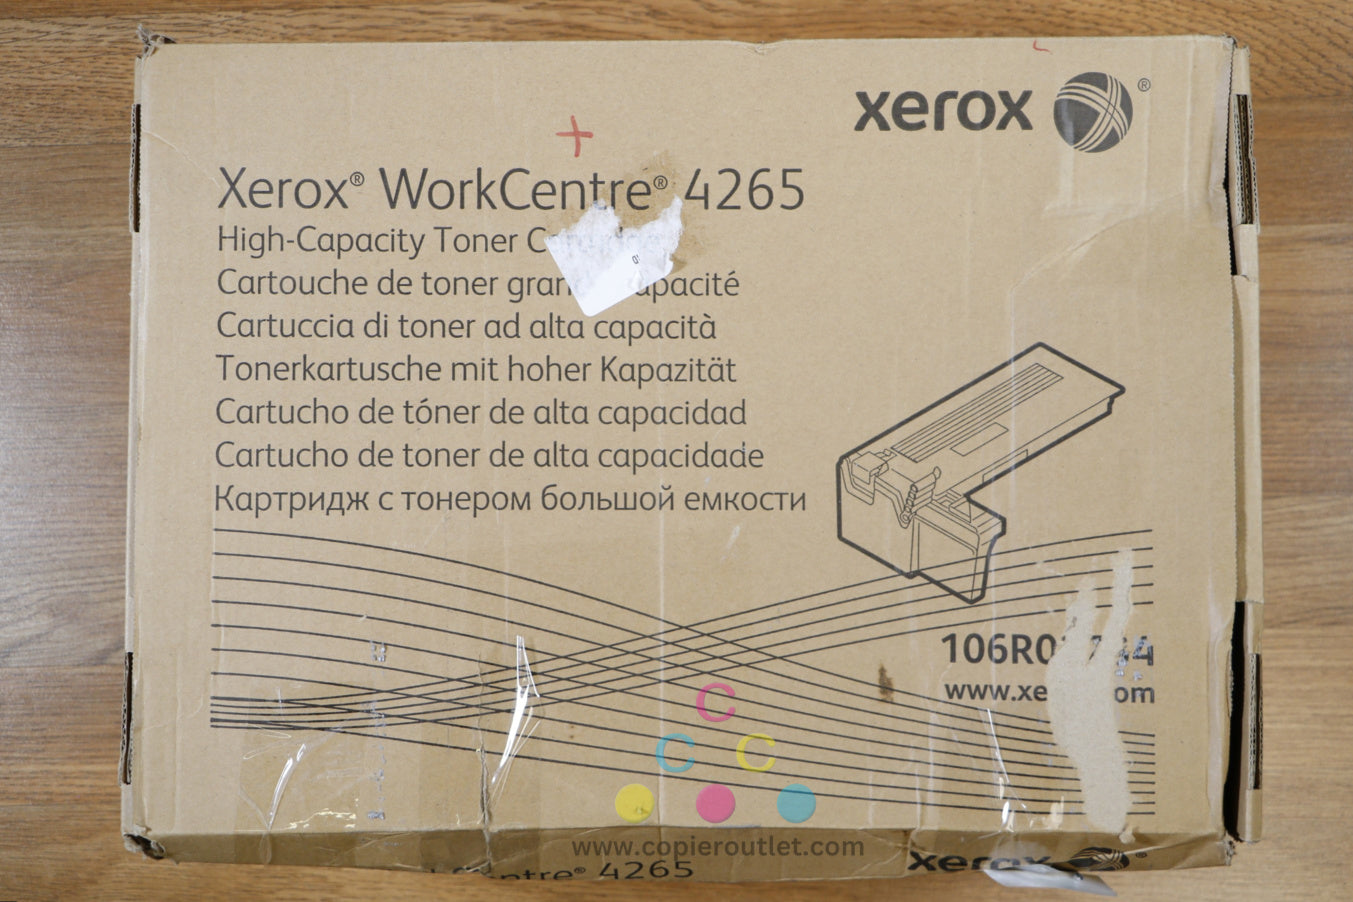 Open Genuine Xerox Black High Capacity Toner Cartridge WorkCentre 4265 106R02734